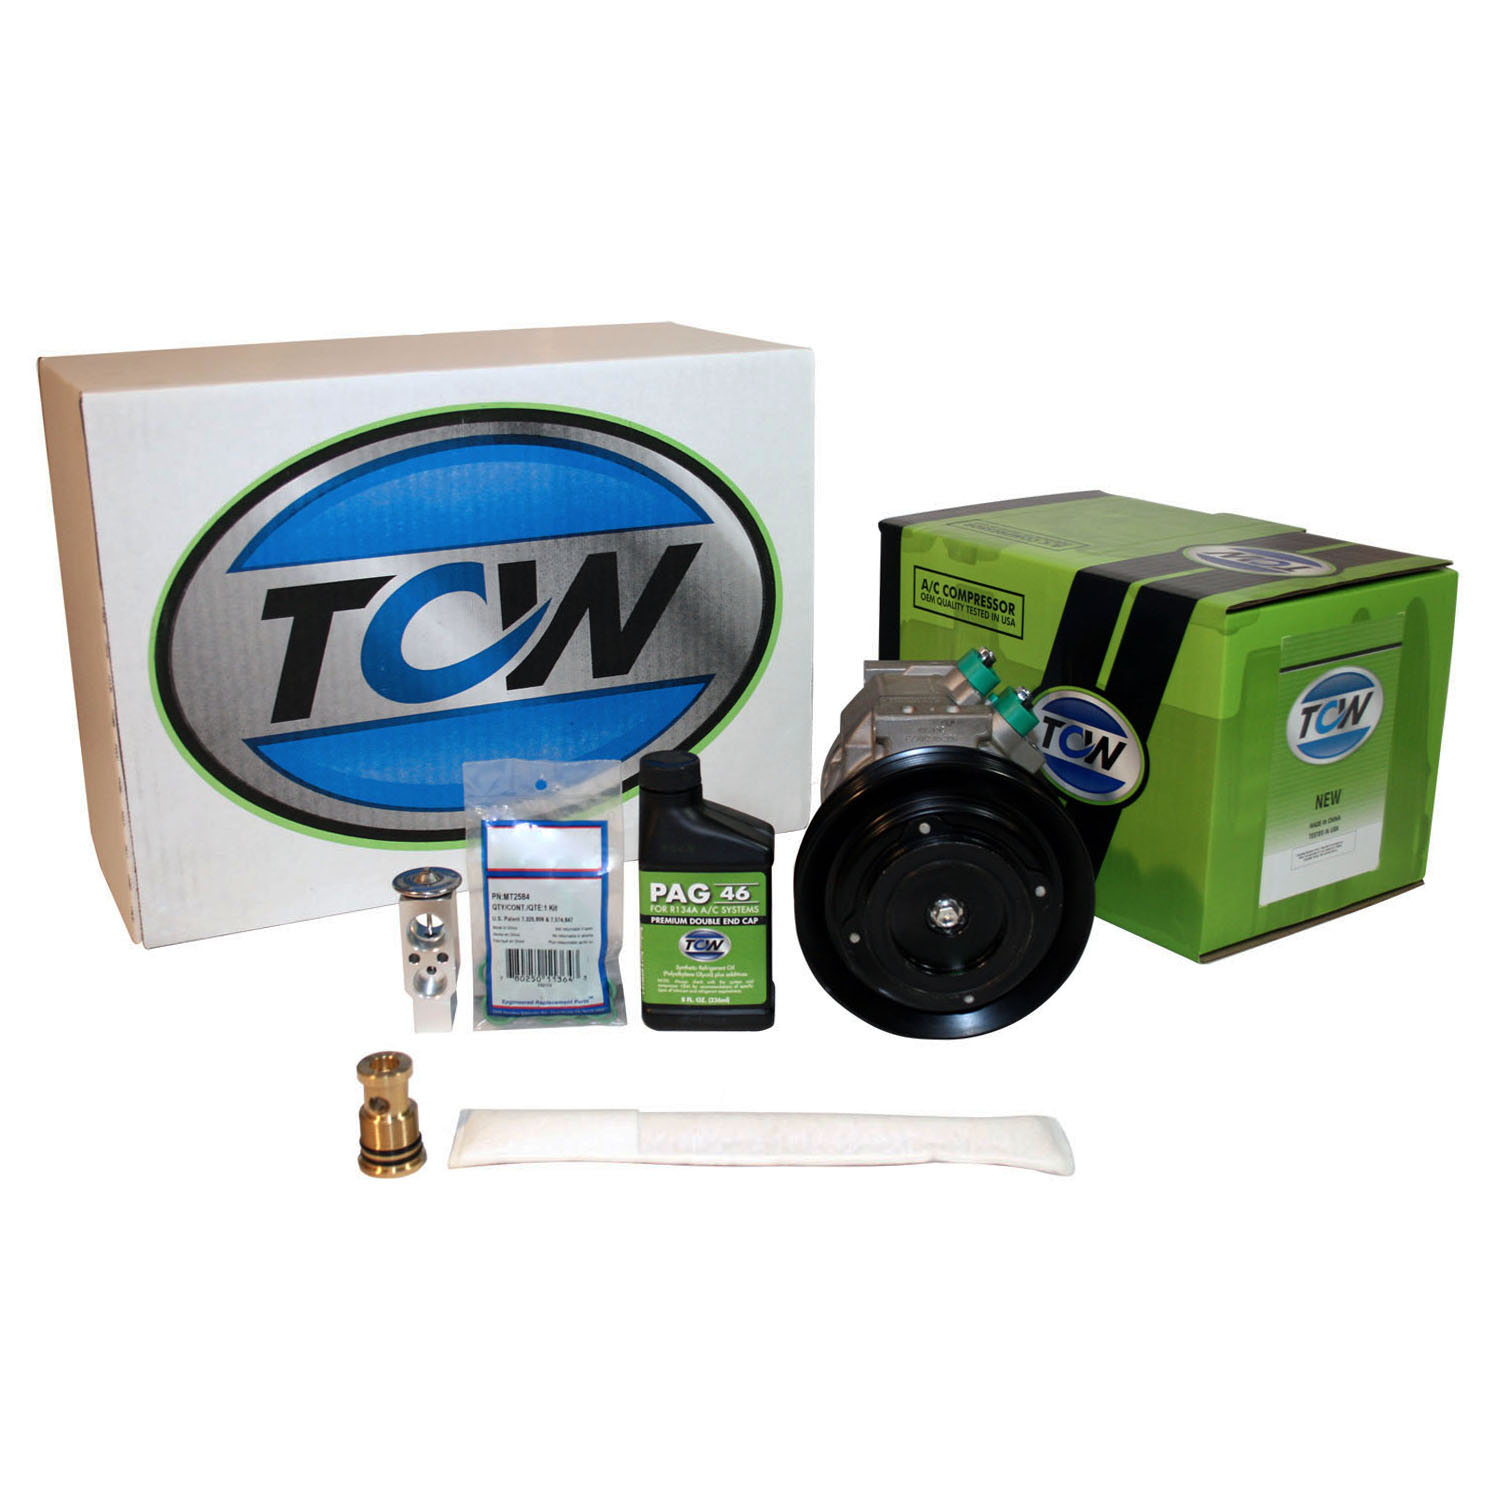 TCW Vehicle A/C Kit K1000272N New Product Image field_60b6a13a6e67c